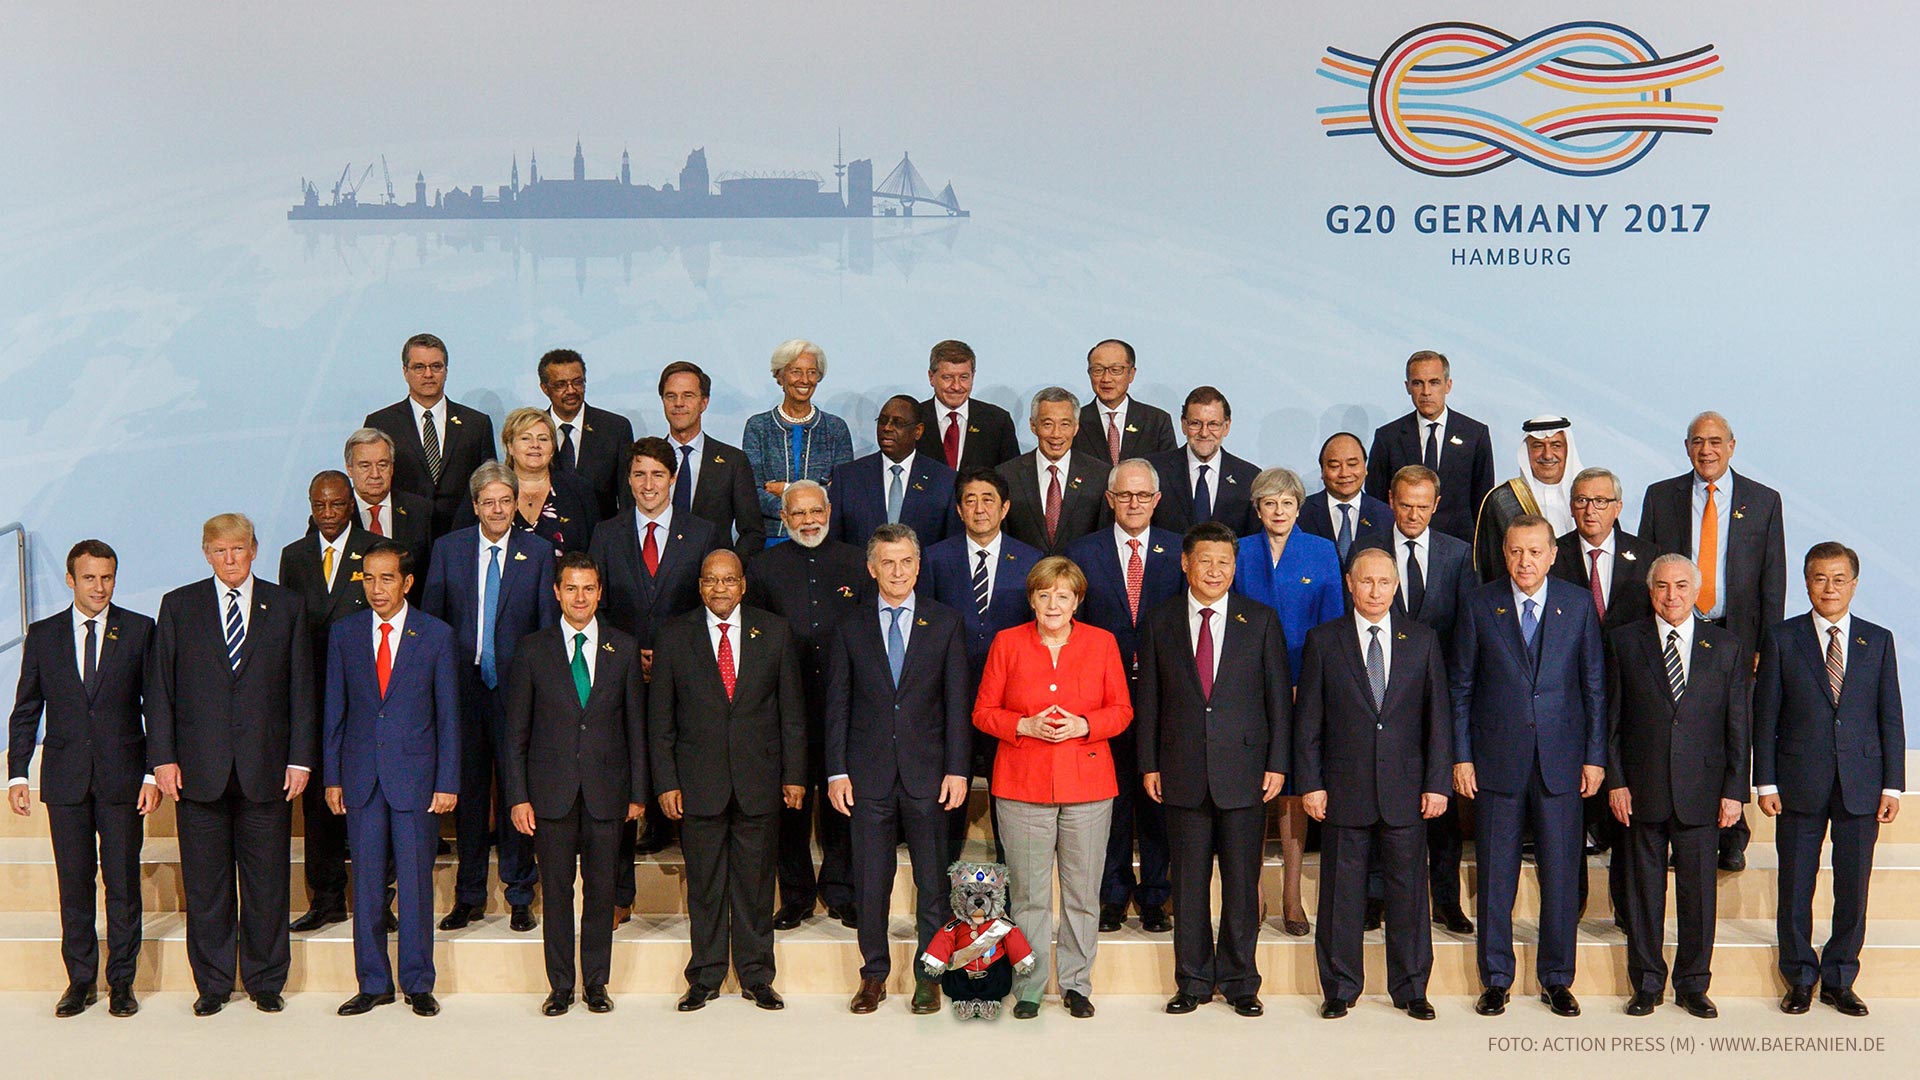 Teddybär König Opa I. auf dem Teilnehmerfoto G20-Gipfel in Hamburg